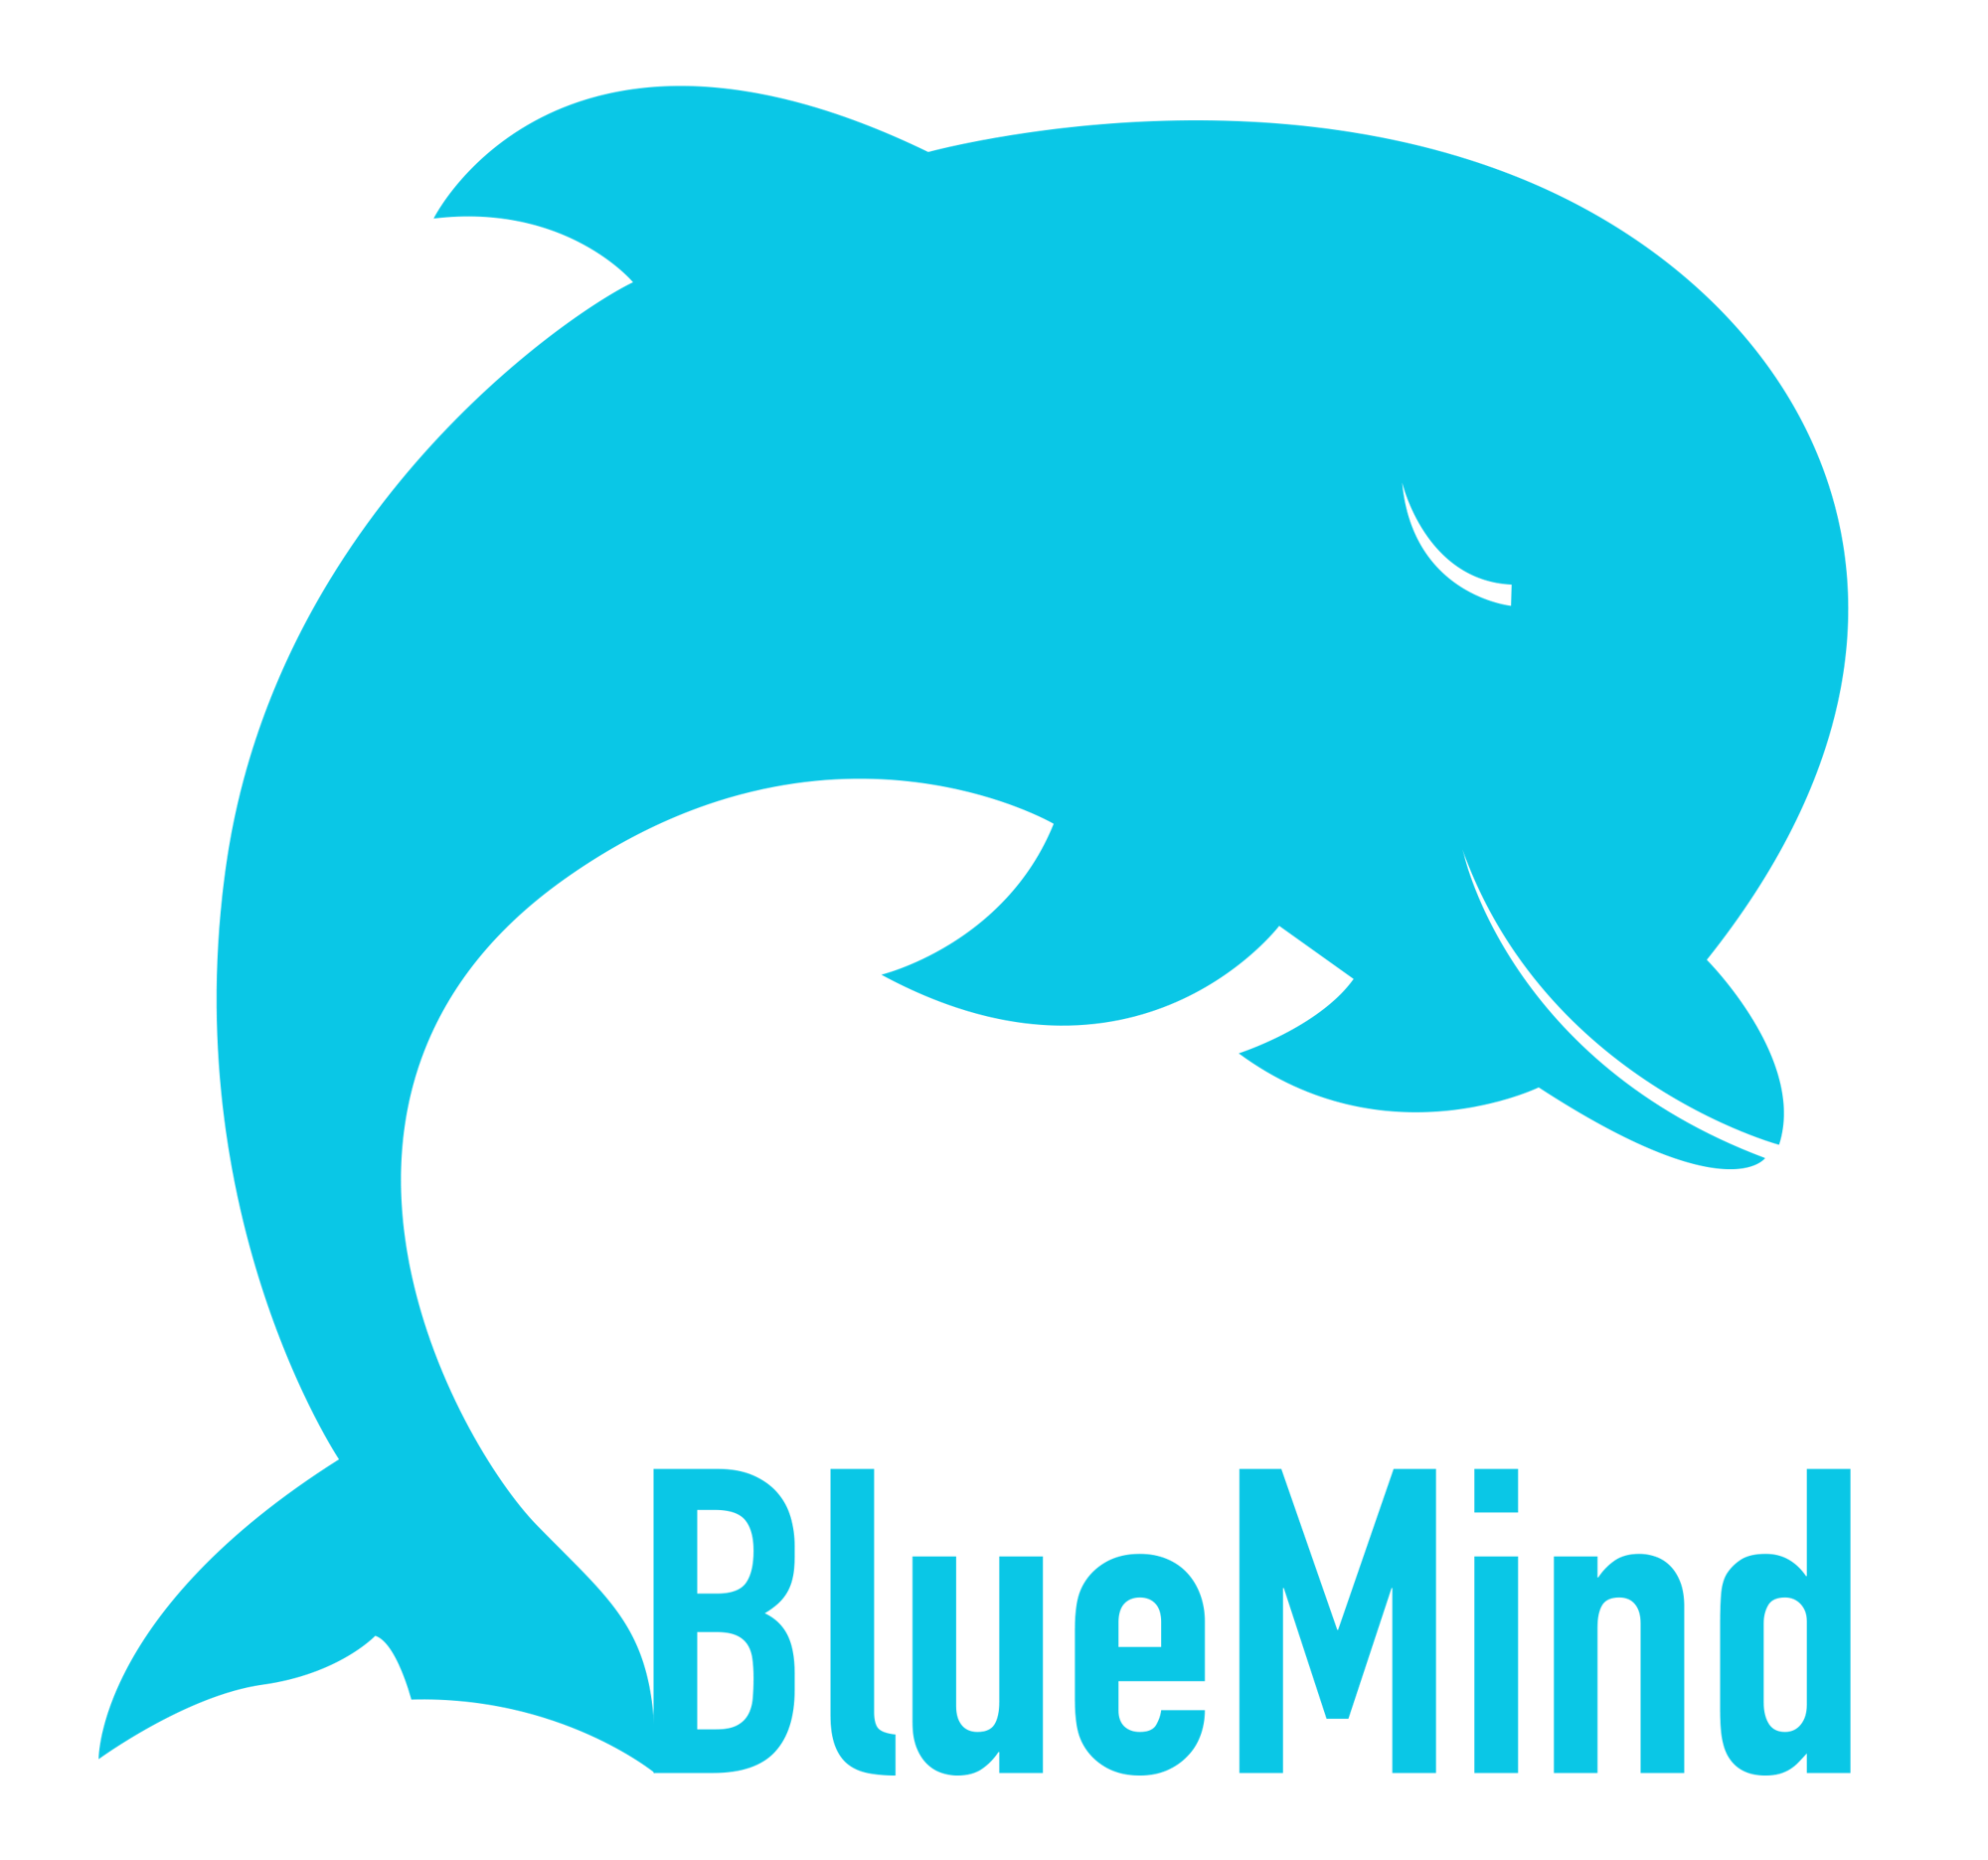 Bluemind-logo-new